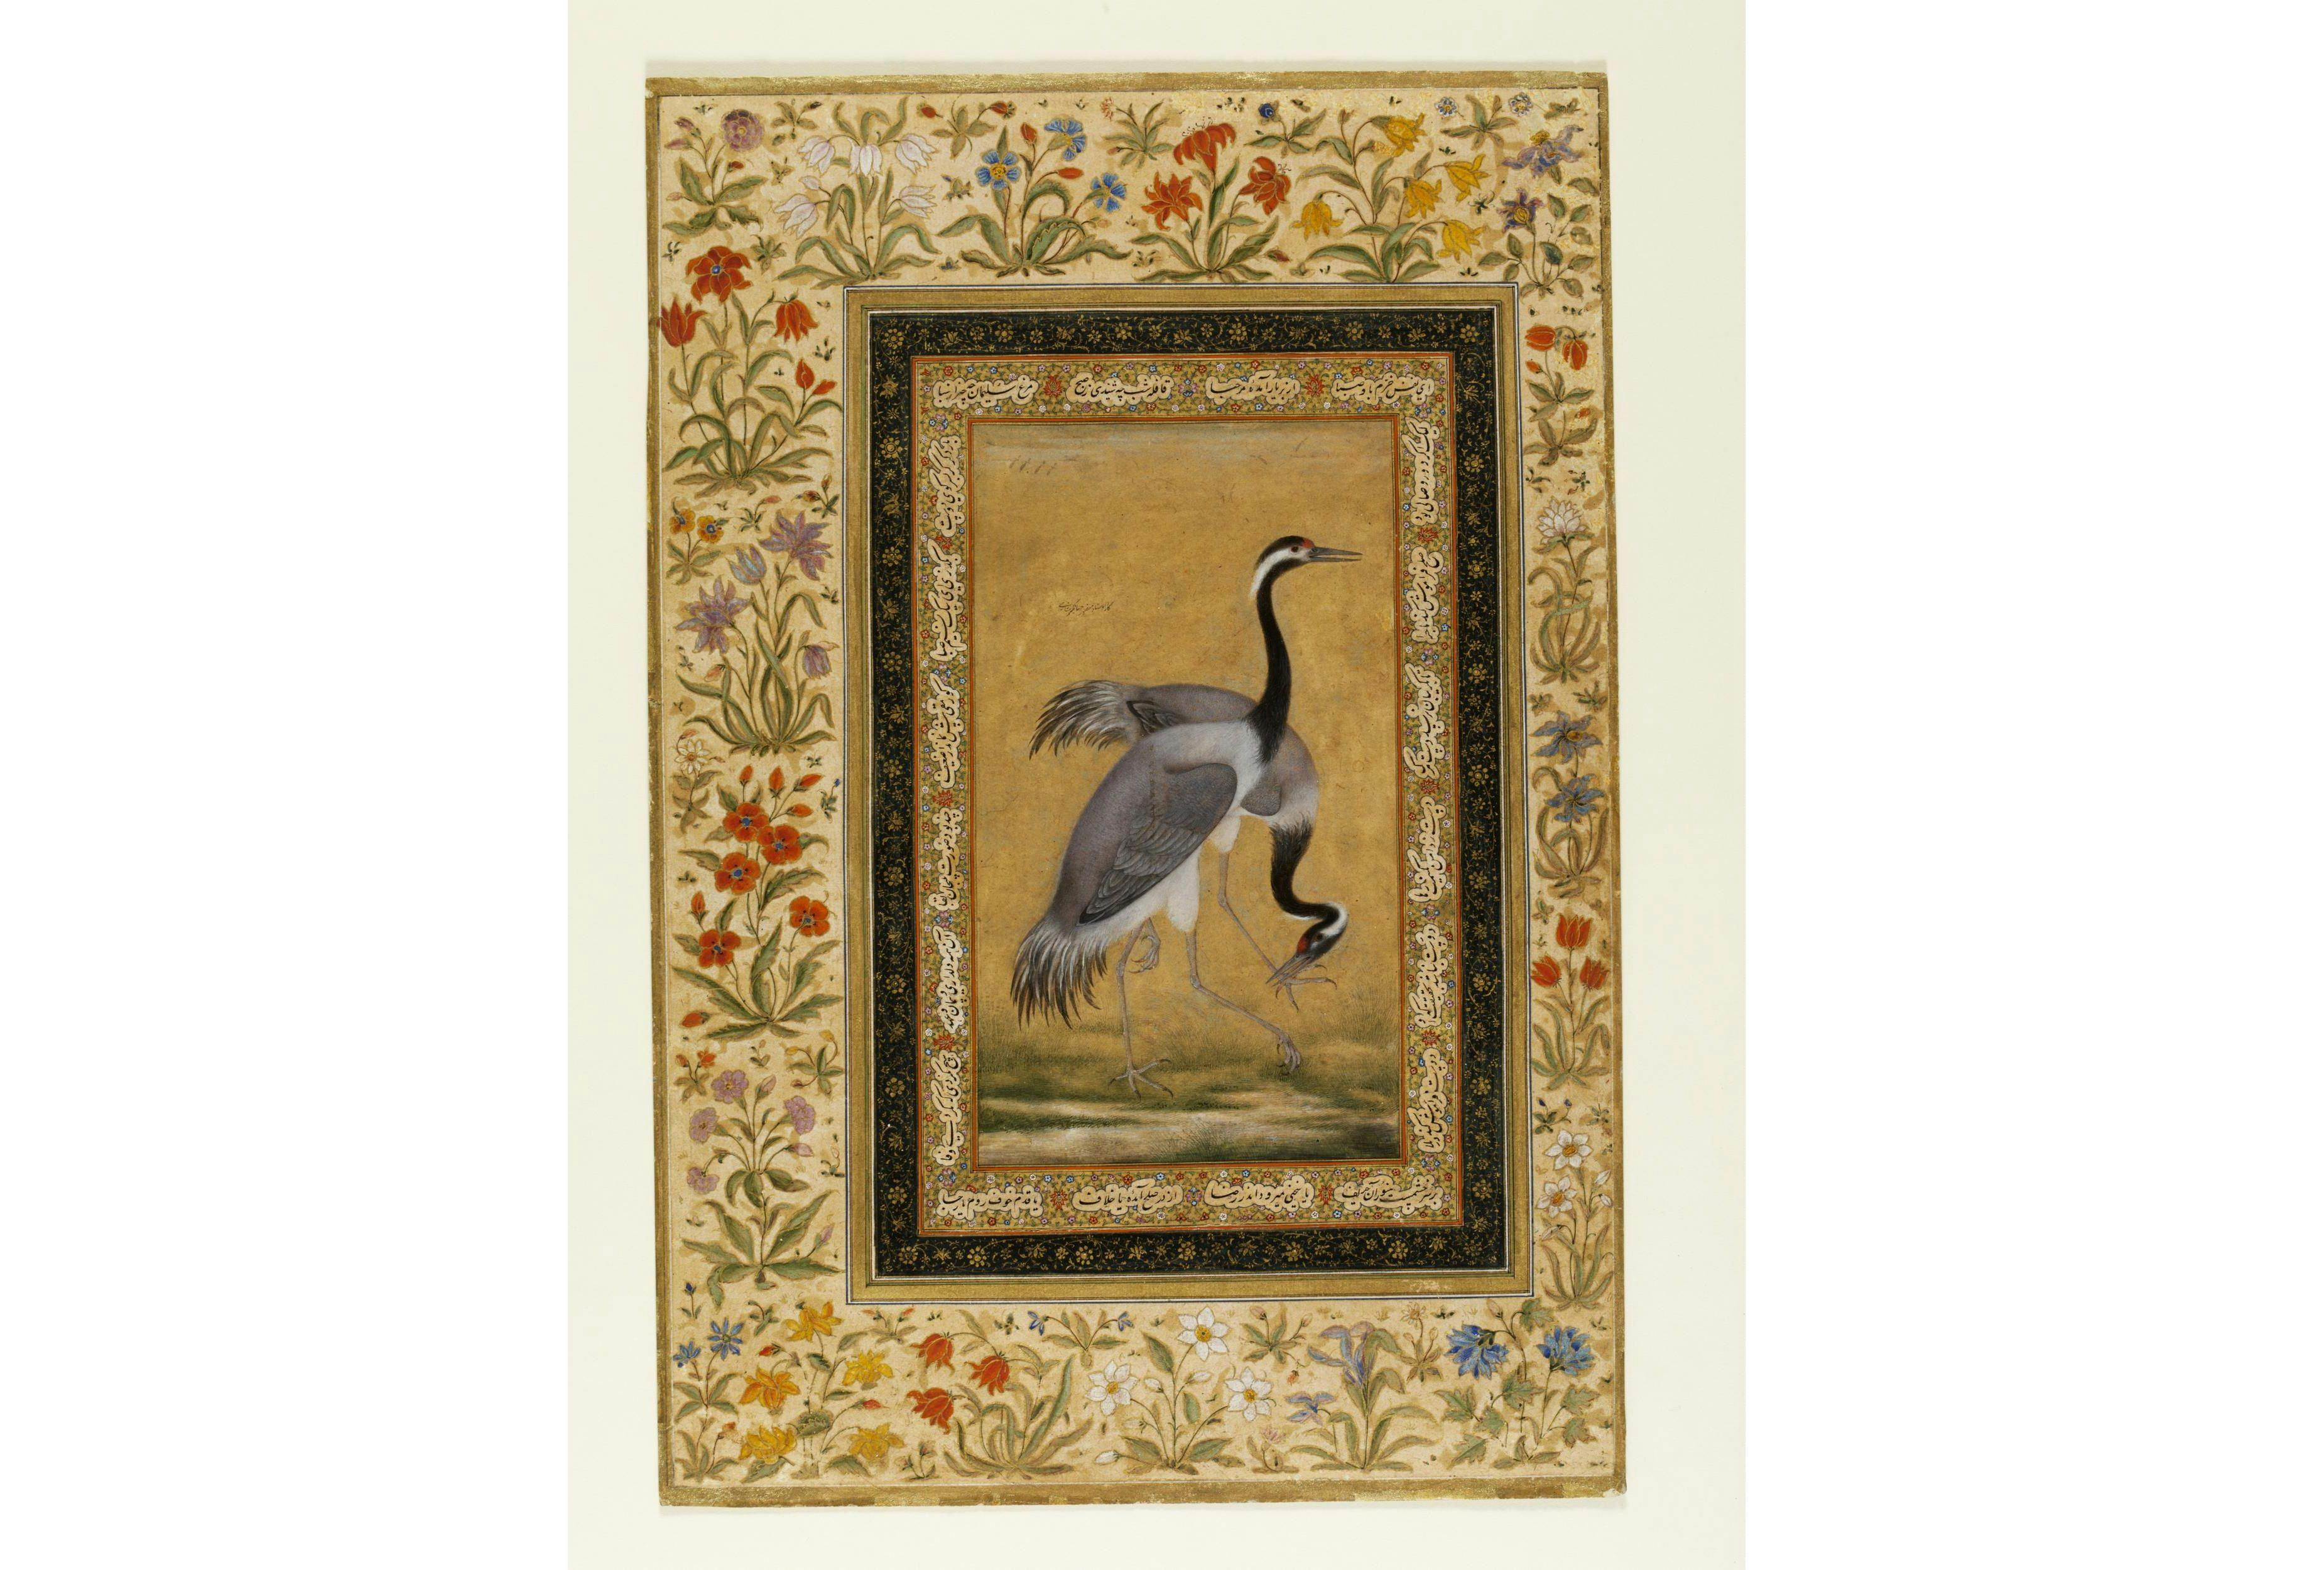 A 19th century copy of Mansoor’s original painting of cranes